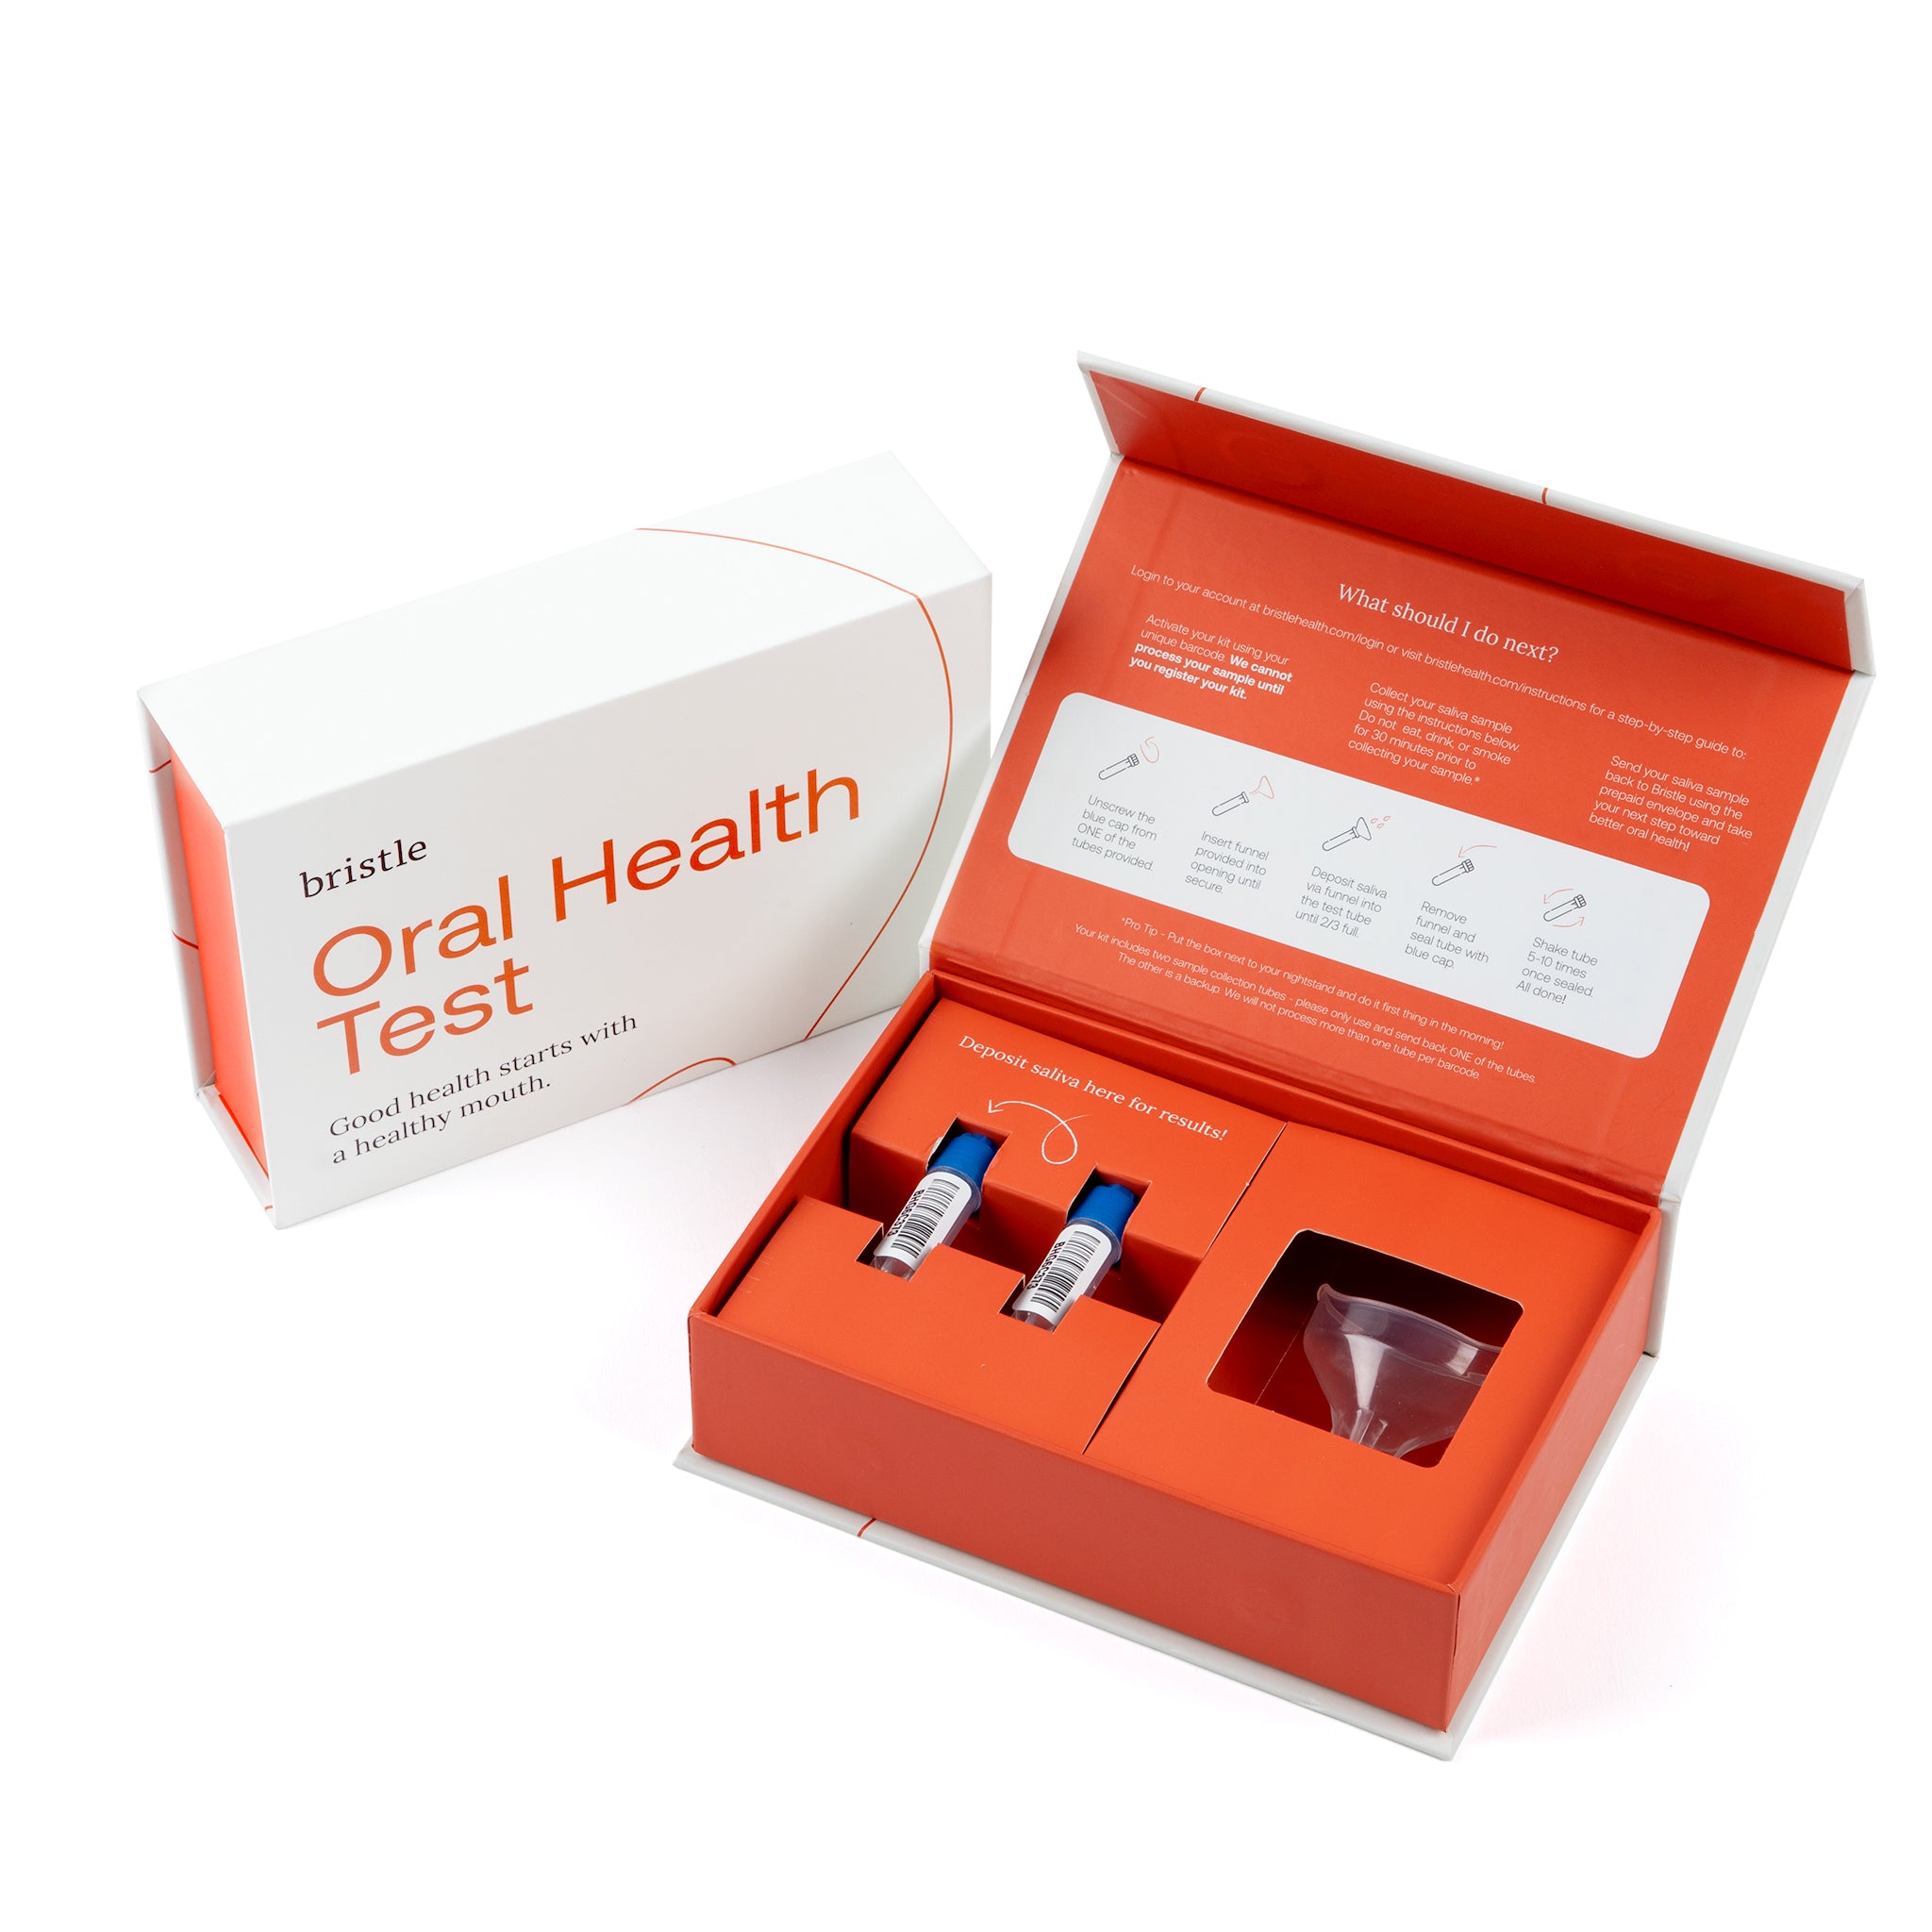 Dental care product sample kits